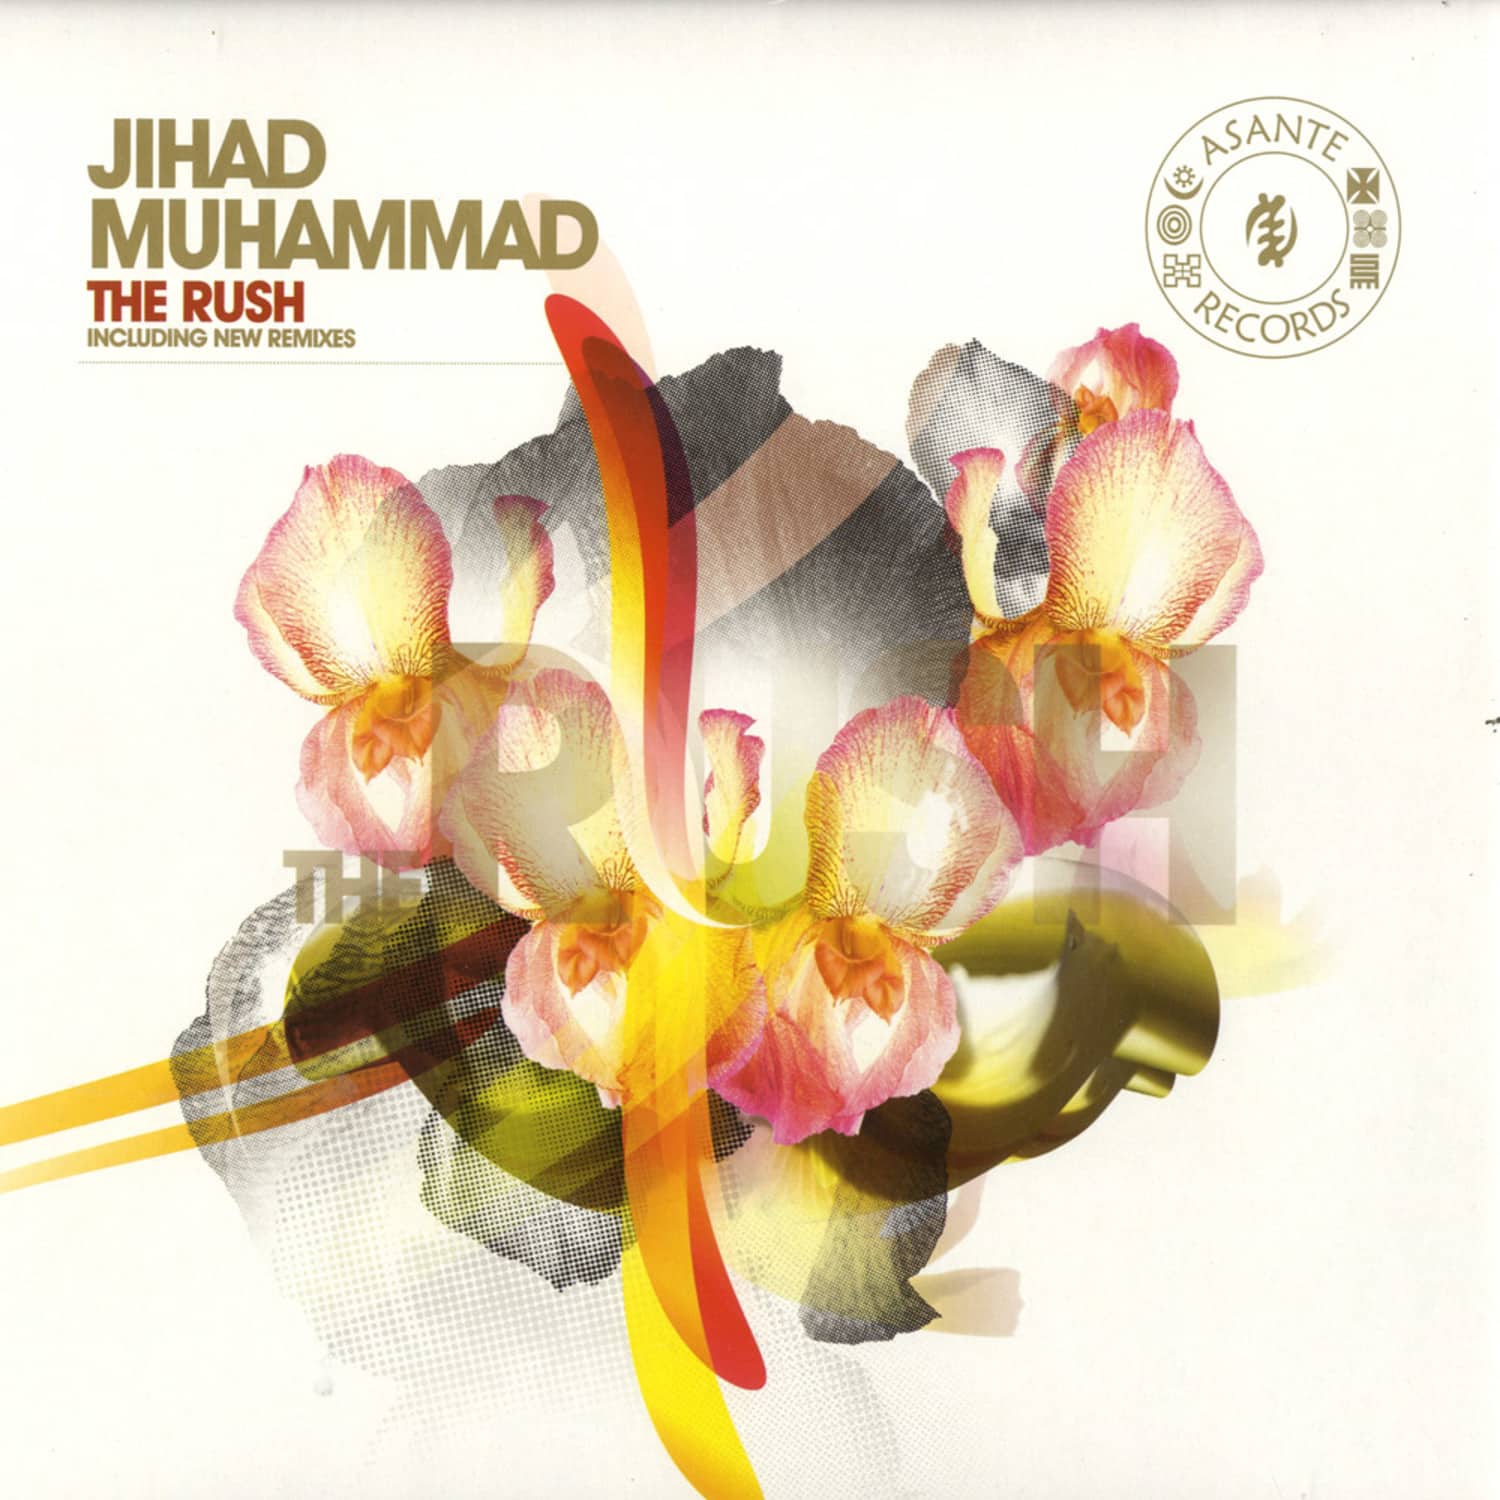 Jihad Muhammad - THE RUSH